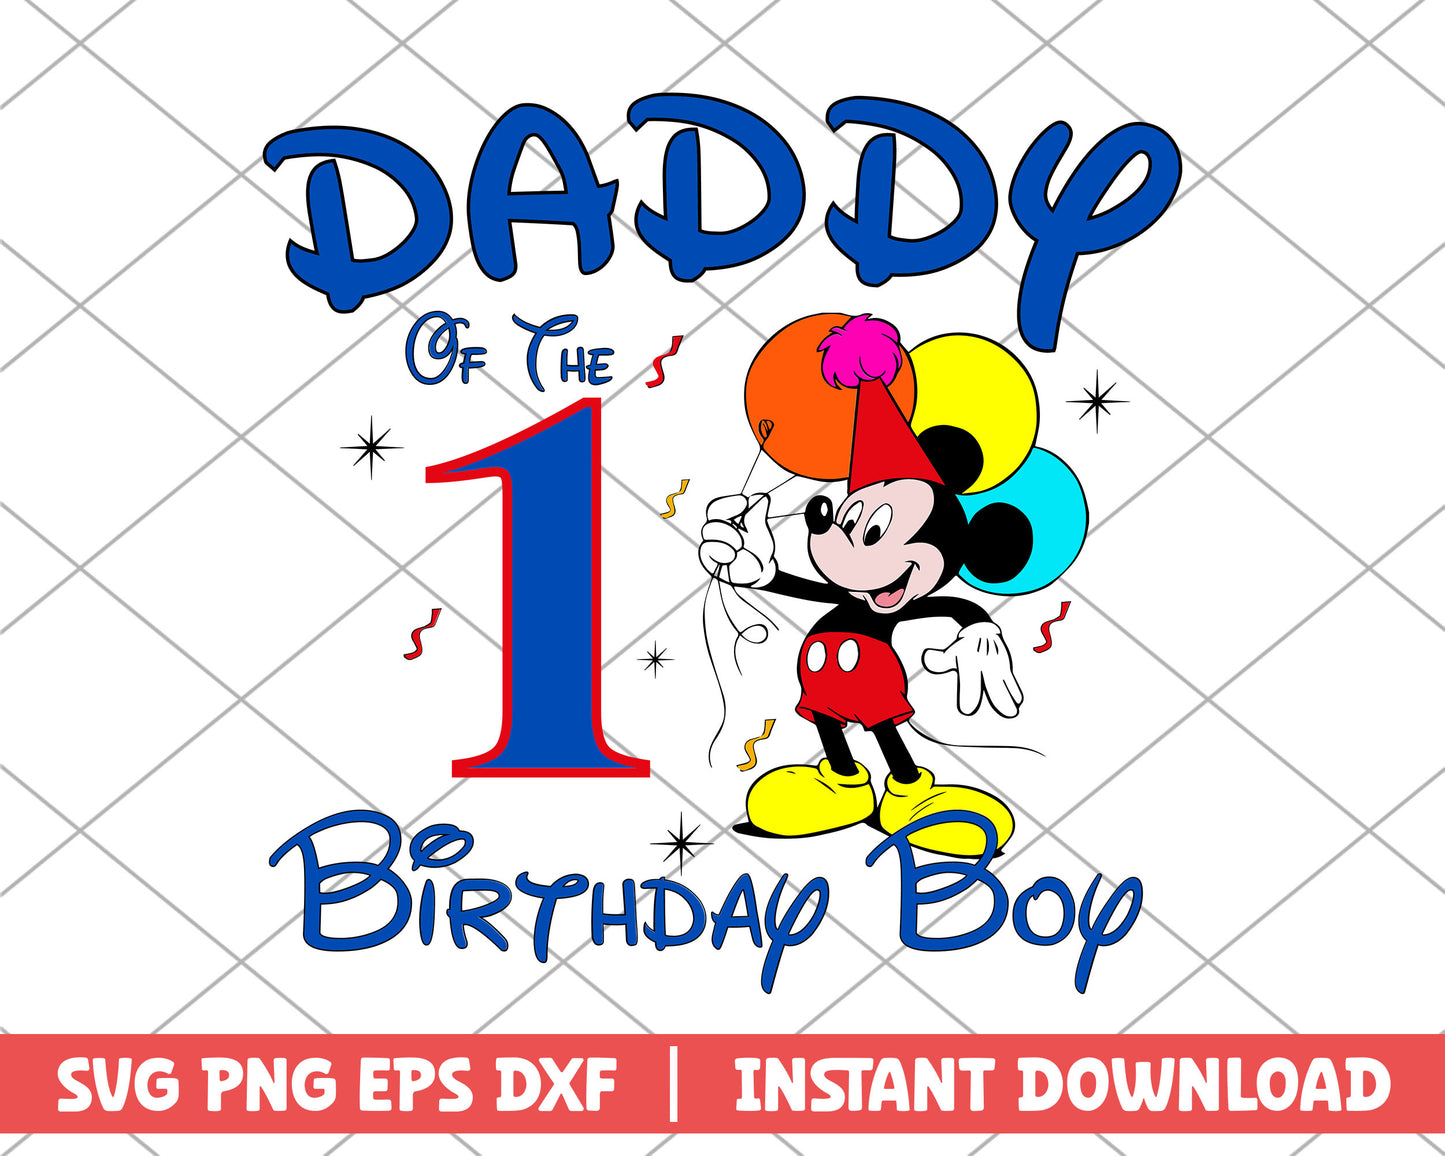 Daddy of the birthday boy one disney svg